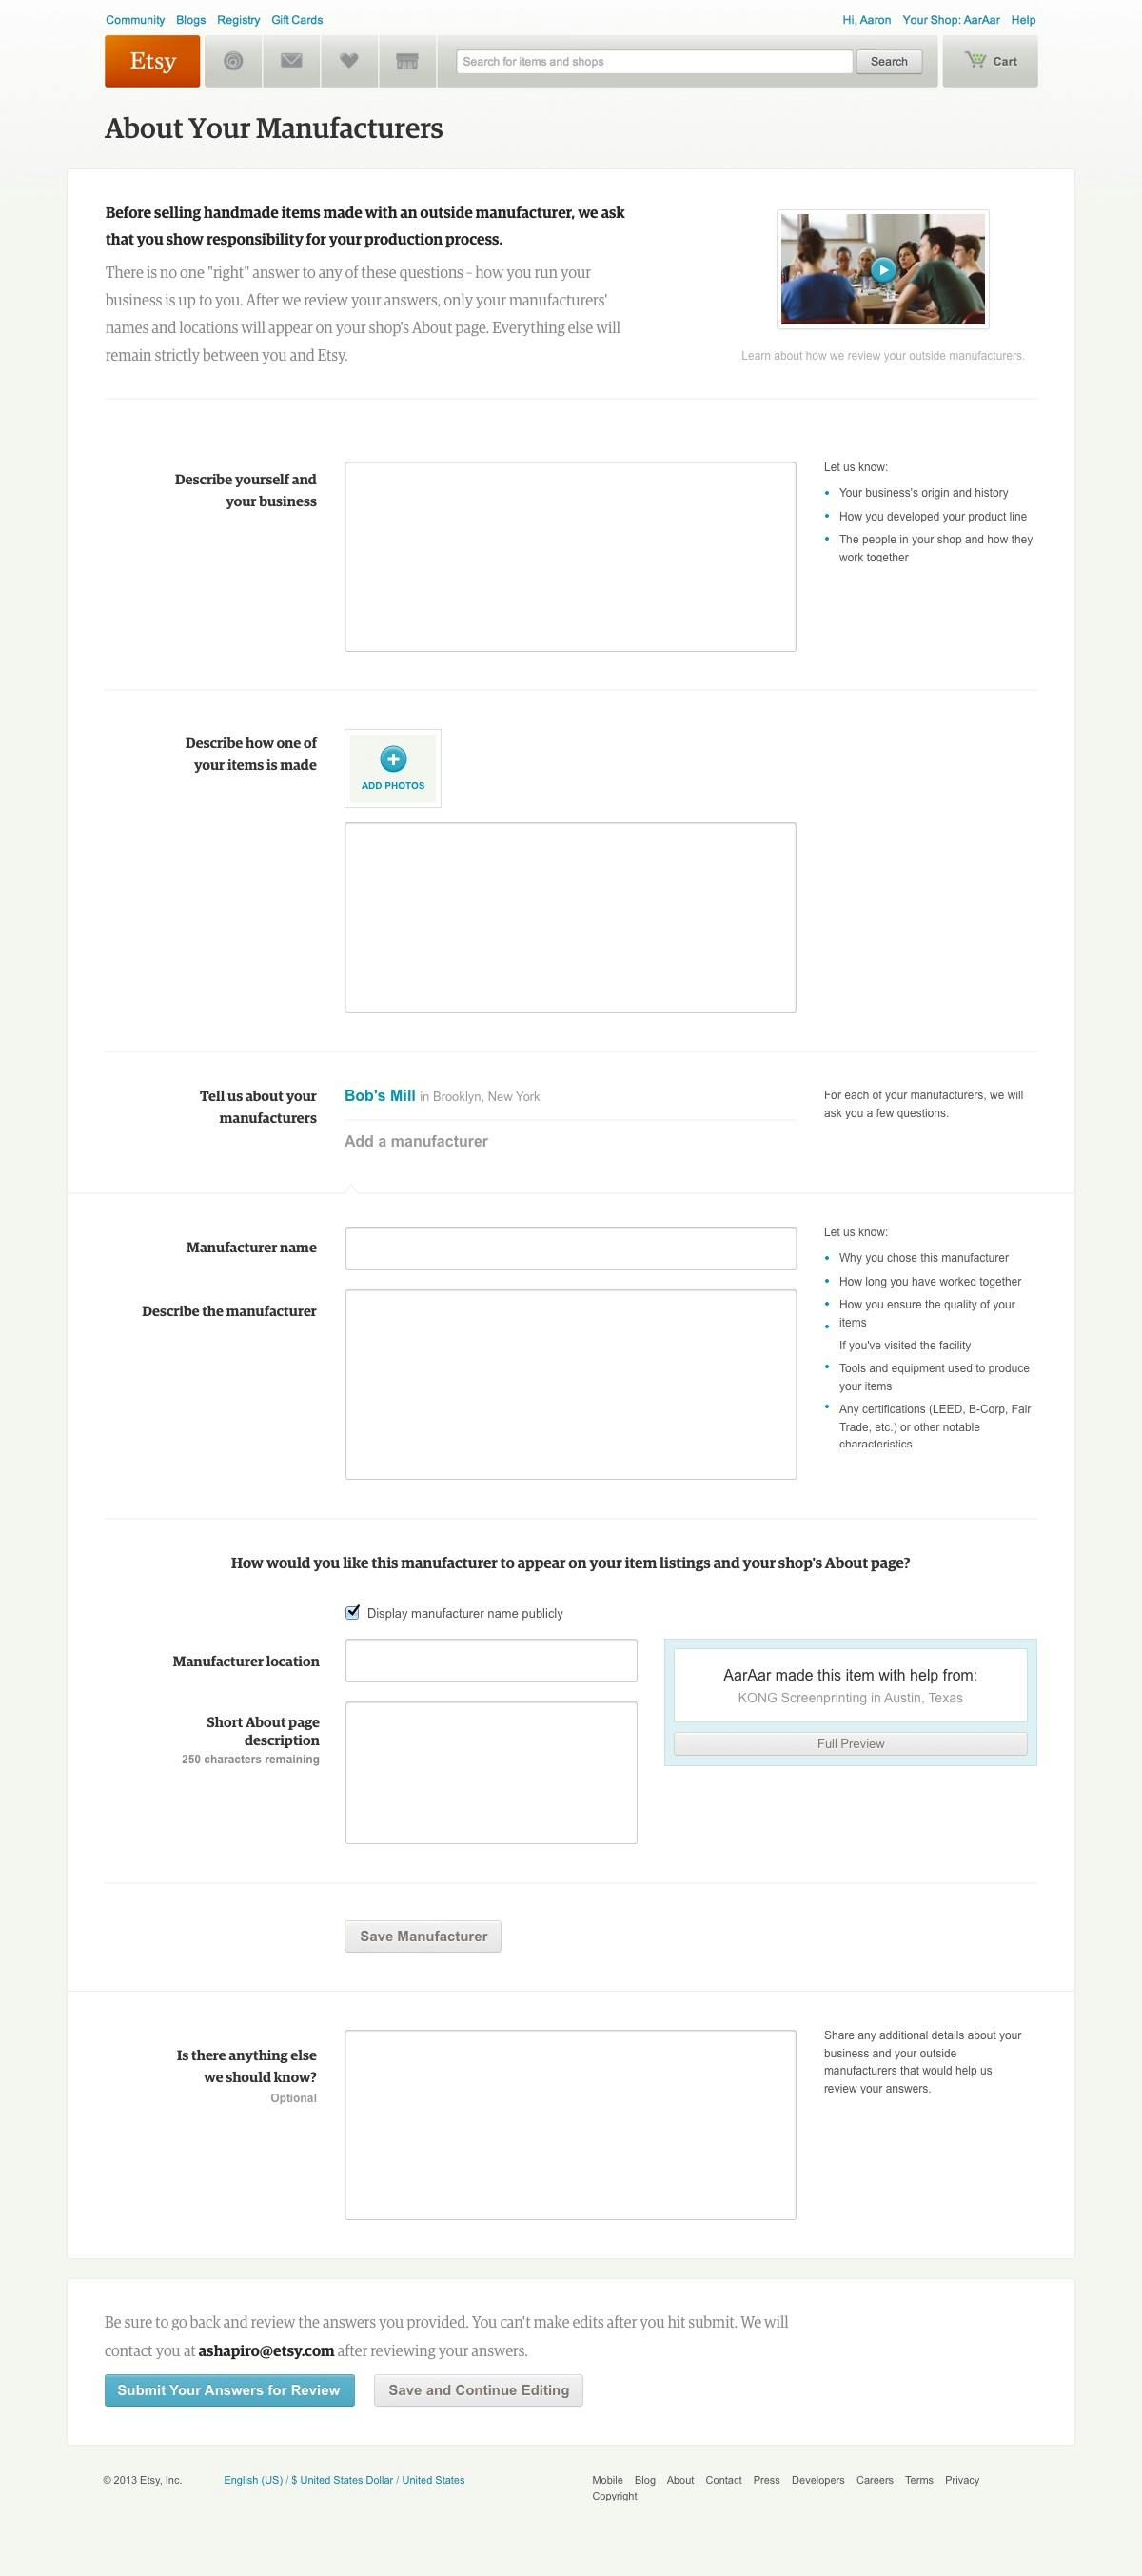 Screenshot of Etsy's manufacturing partner application form